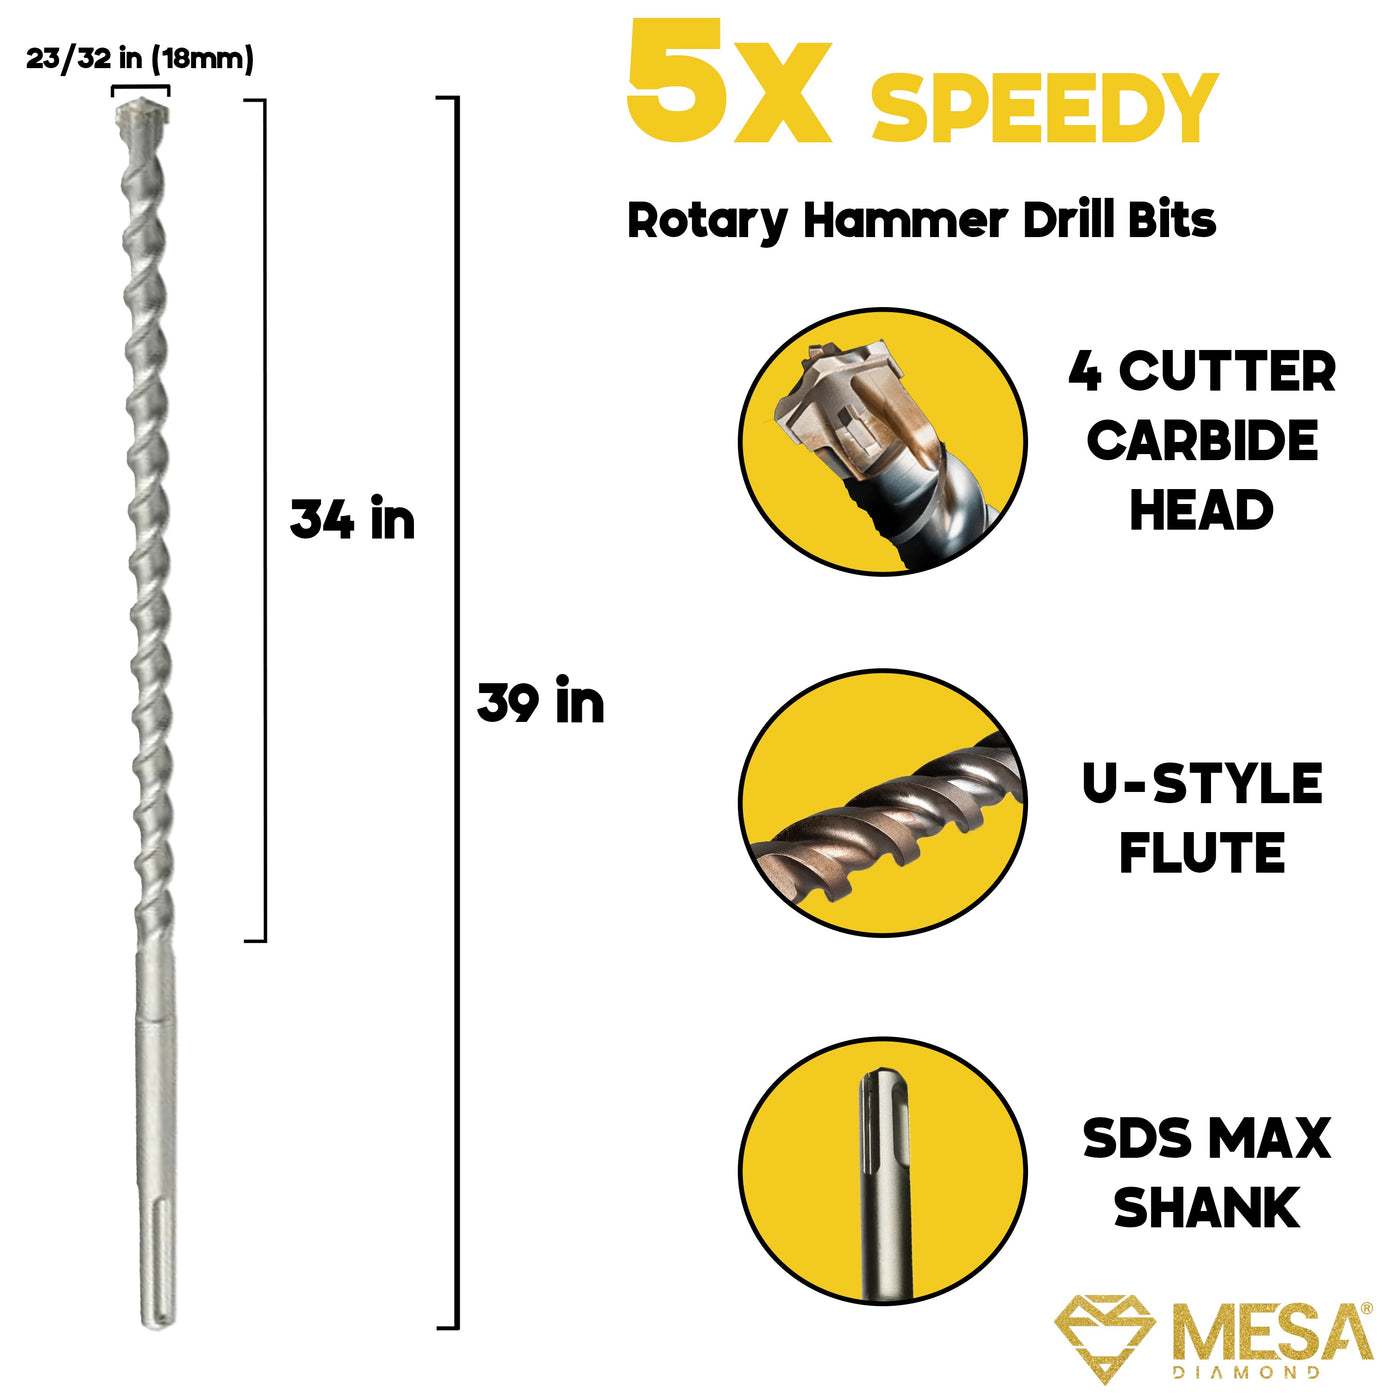 4 CUTTER SDS MAX Masonry Drill BitMESA DIAMOND®4SDSMAX183923/32 in (18mm)23/32 in (18mm)39 in